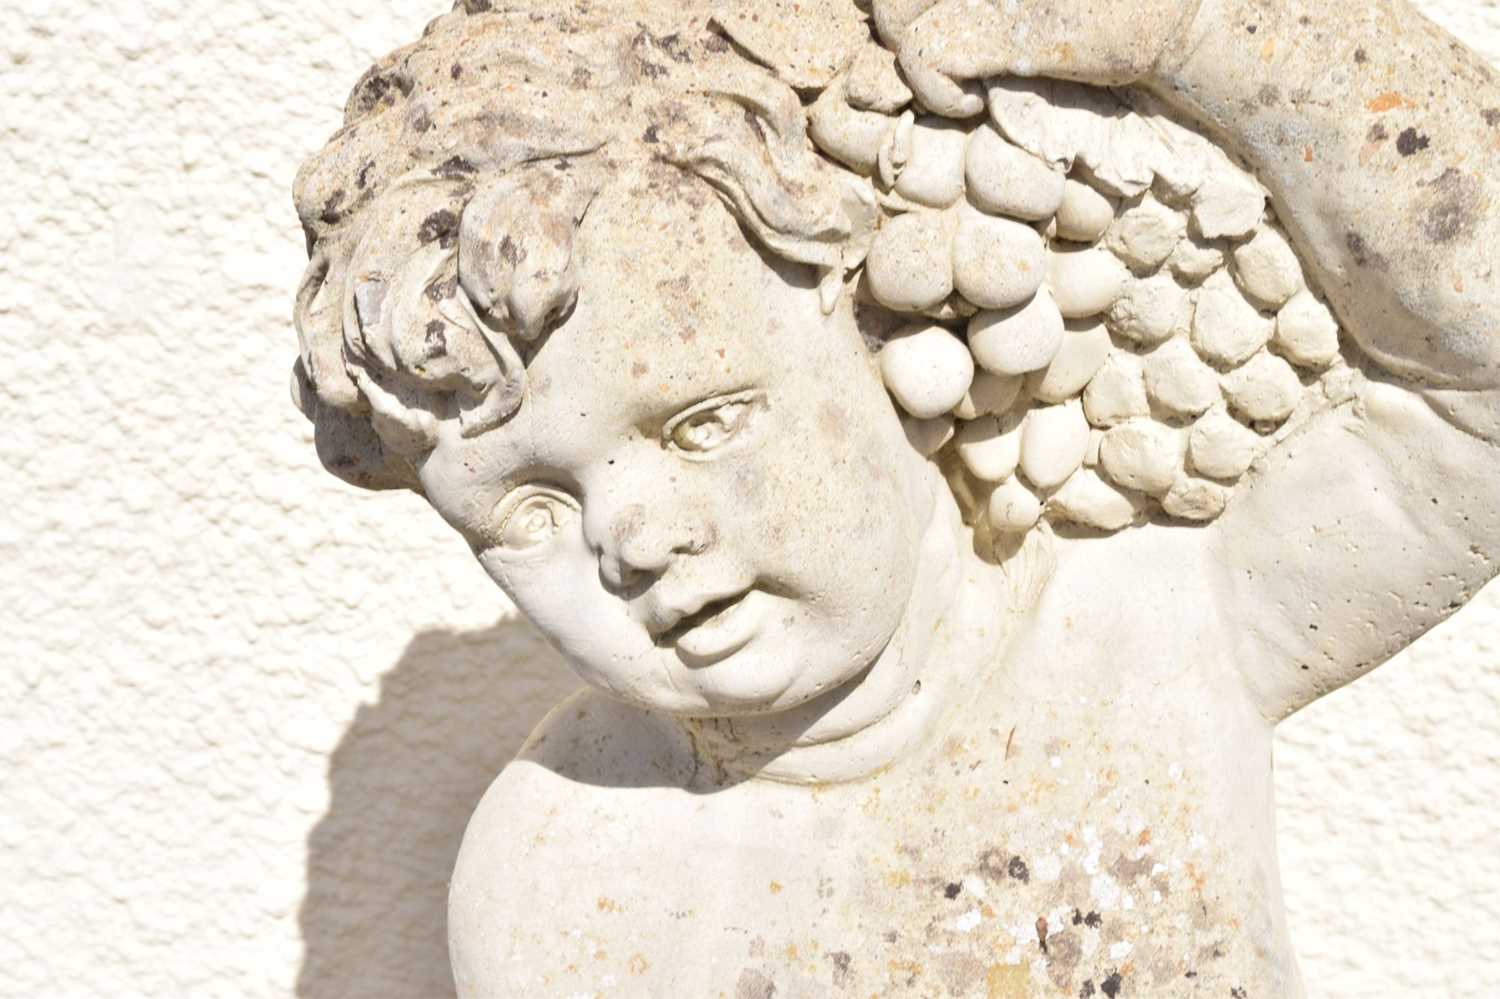 Composite stone garden statue of a cherub holding grapes - Image 5 of 7